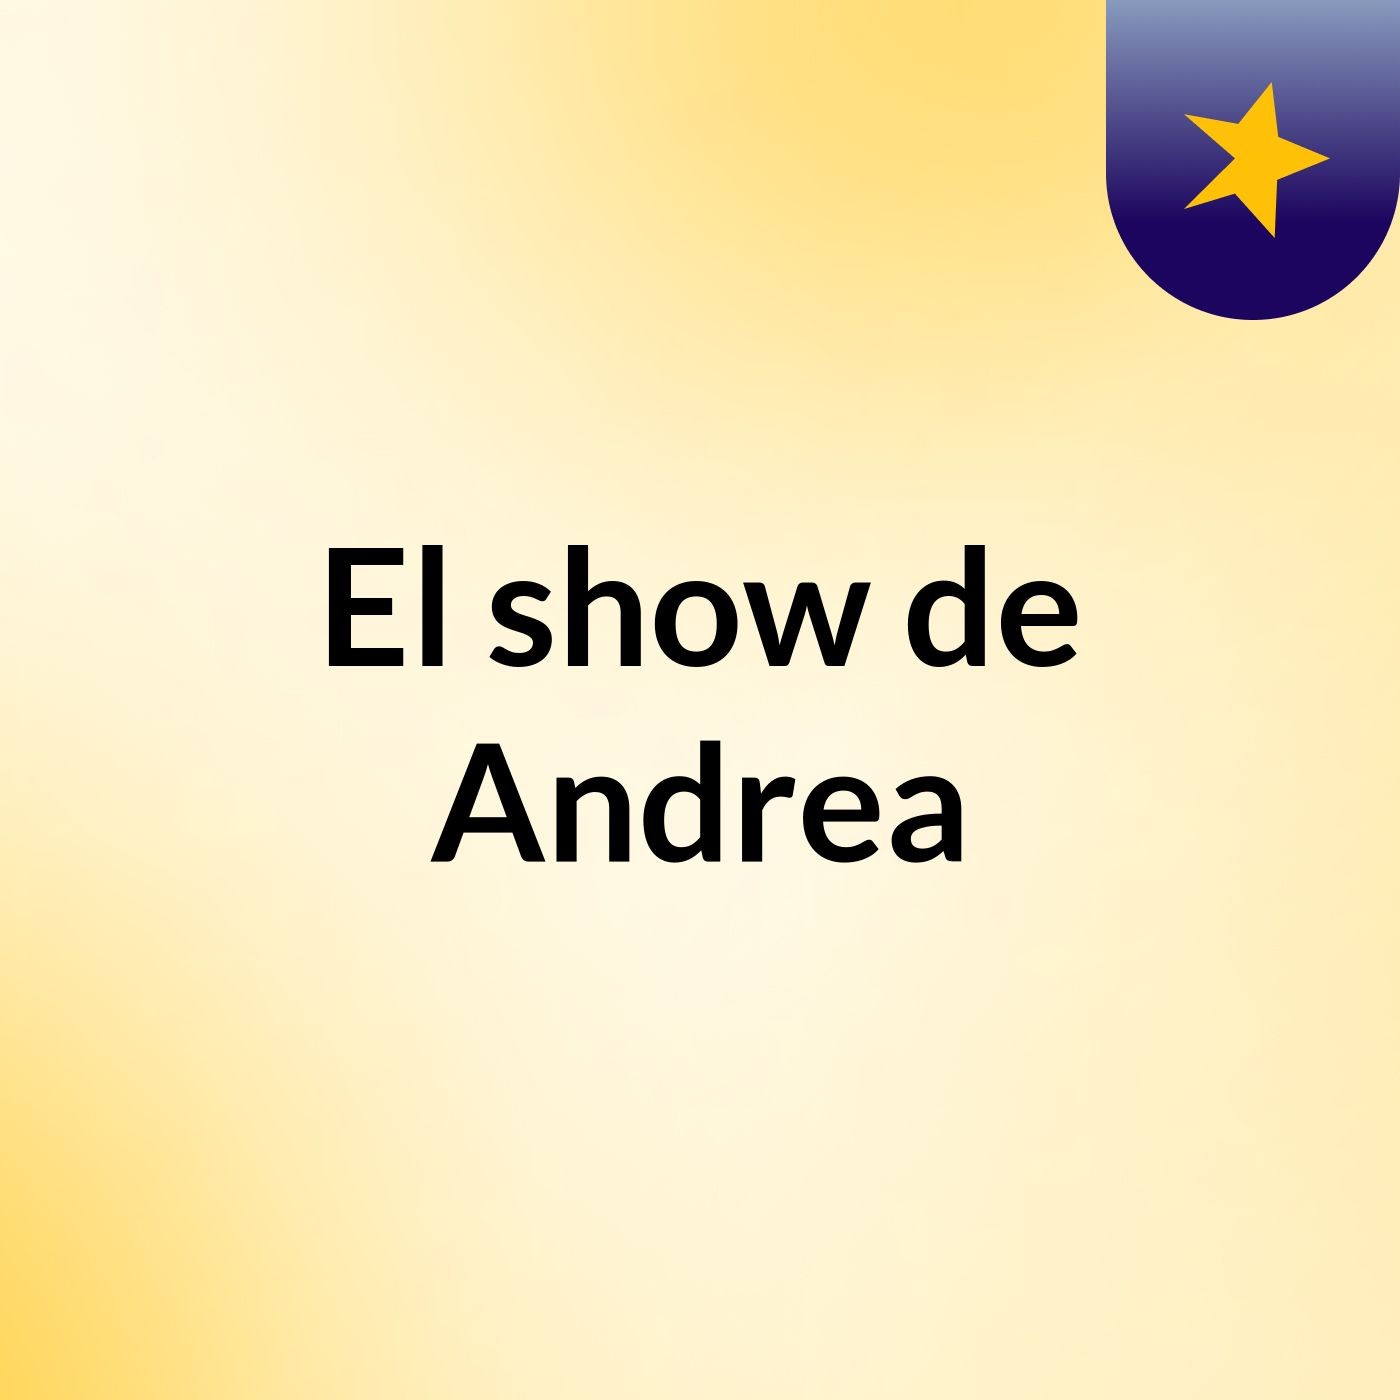 Episodio 2 - El show de Andrea